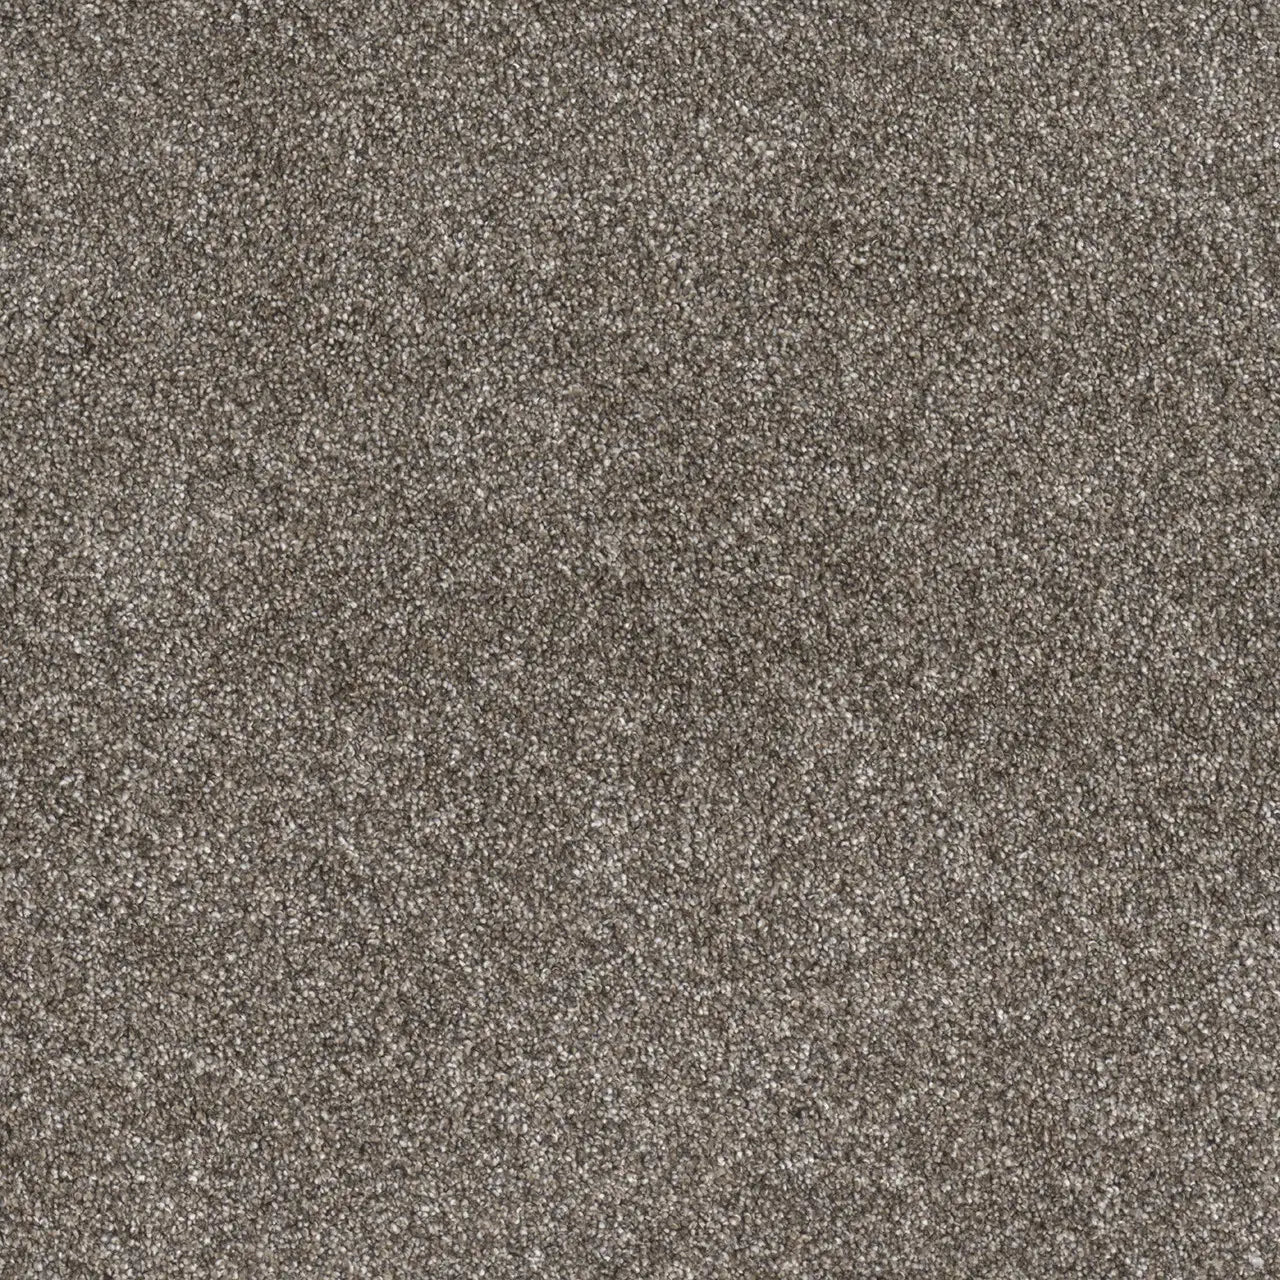 Pewter, Gold Standard III, Carpet by Dreamweaver, Calhoun's Flooring Springfield, IL